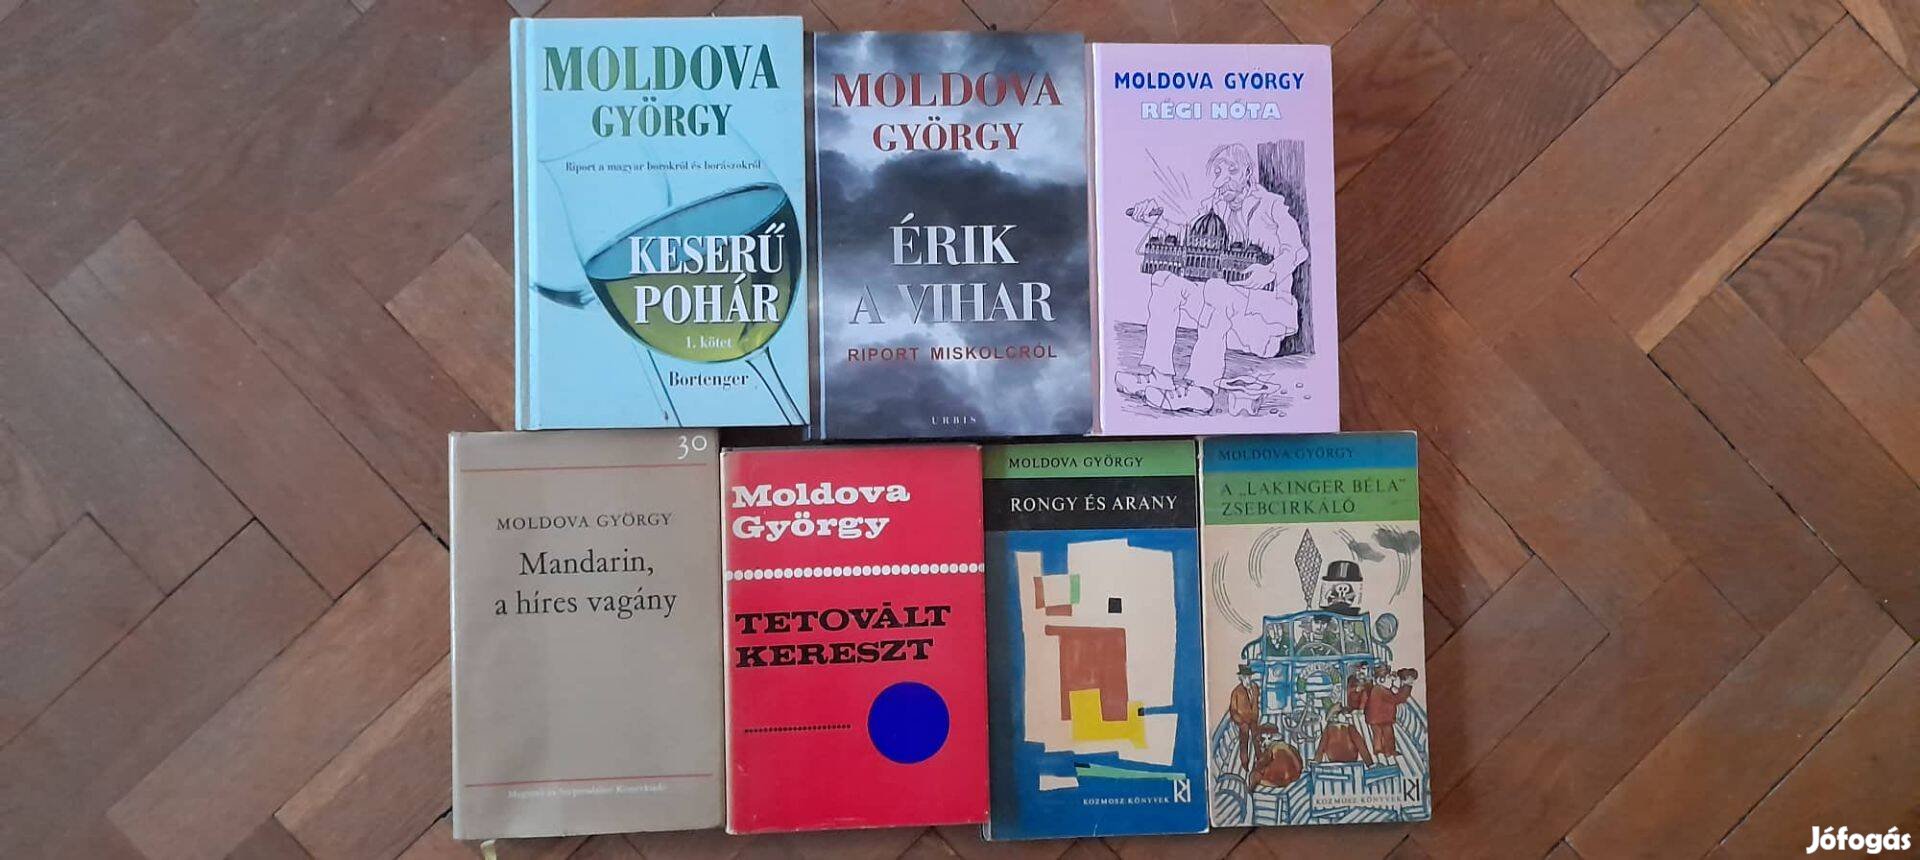 Moldova könyvek